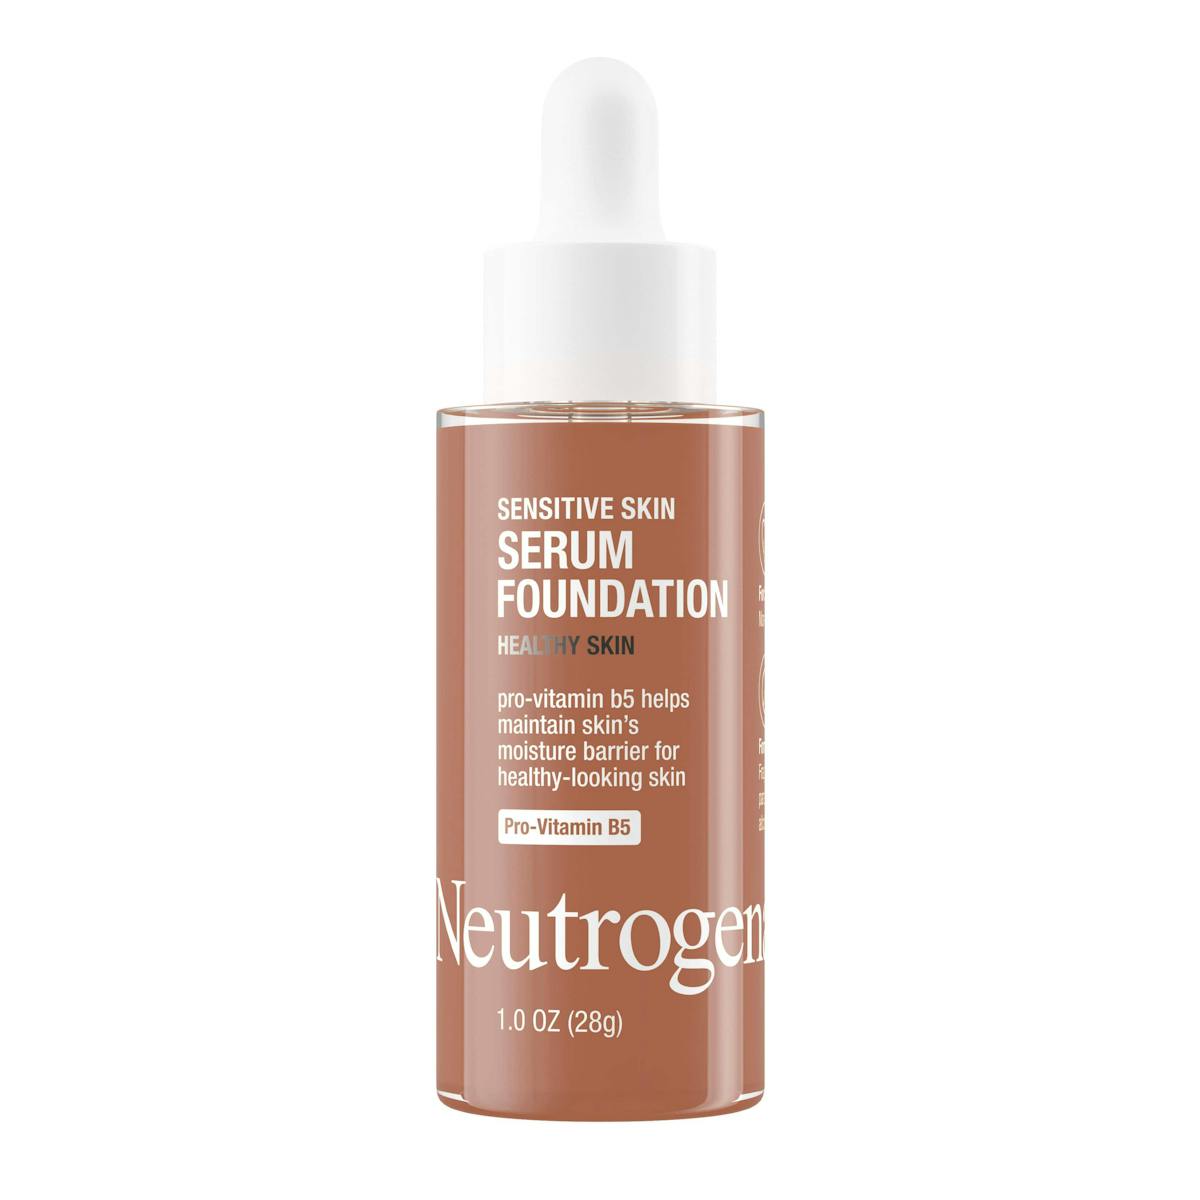 neutrogena healthy skin foundation coverage